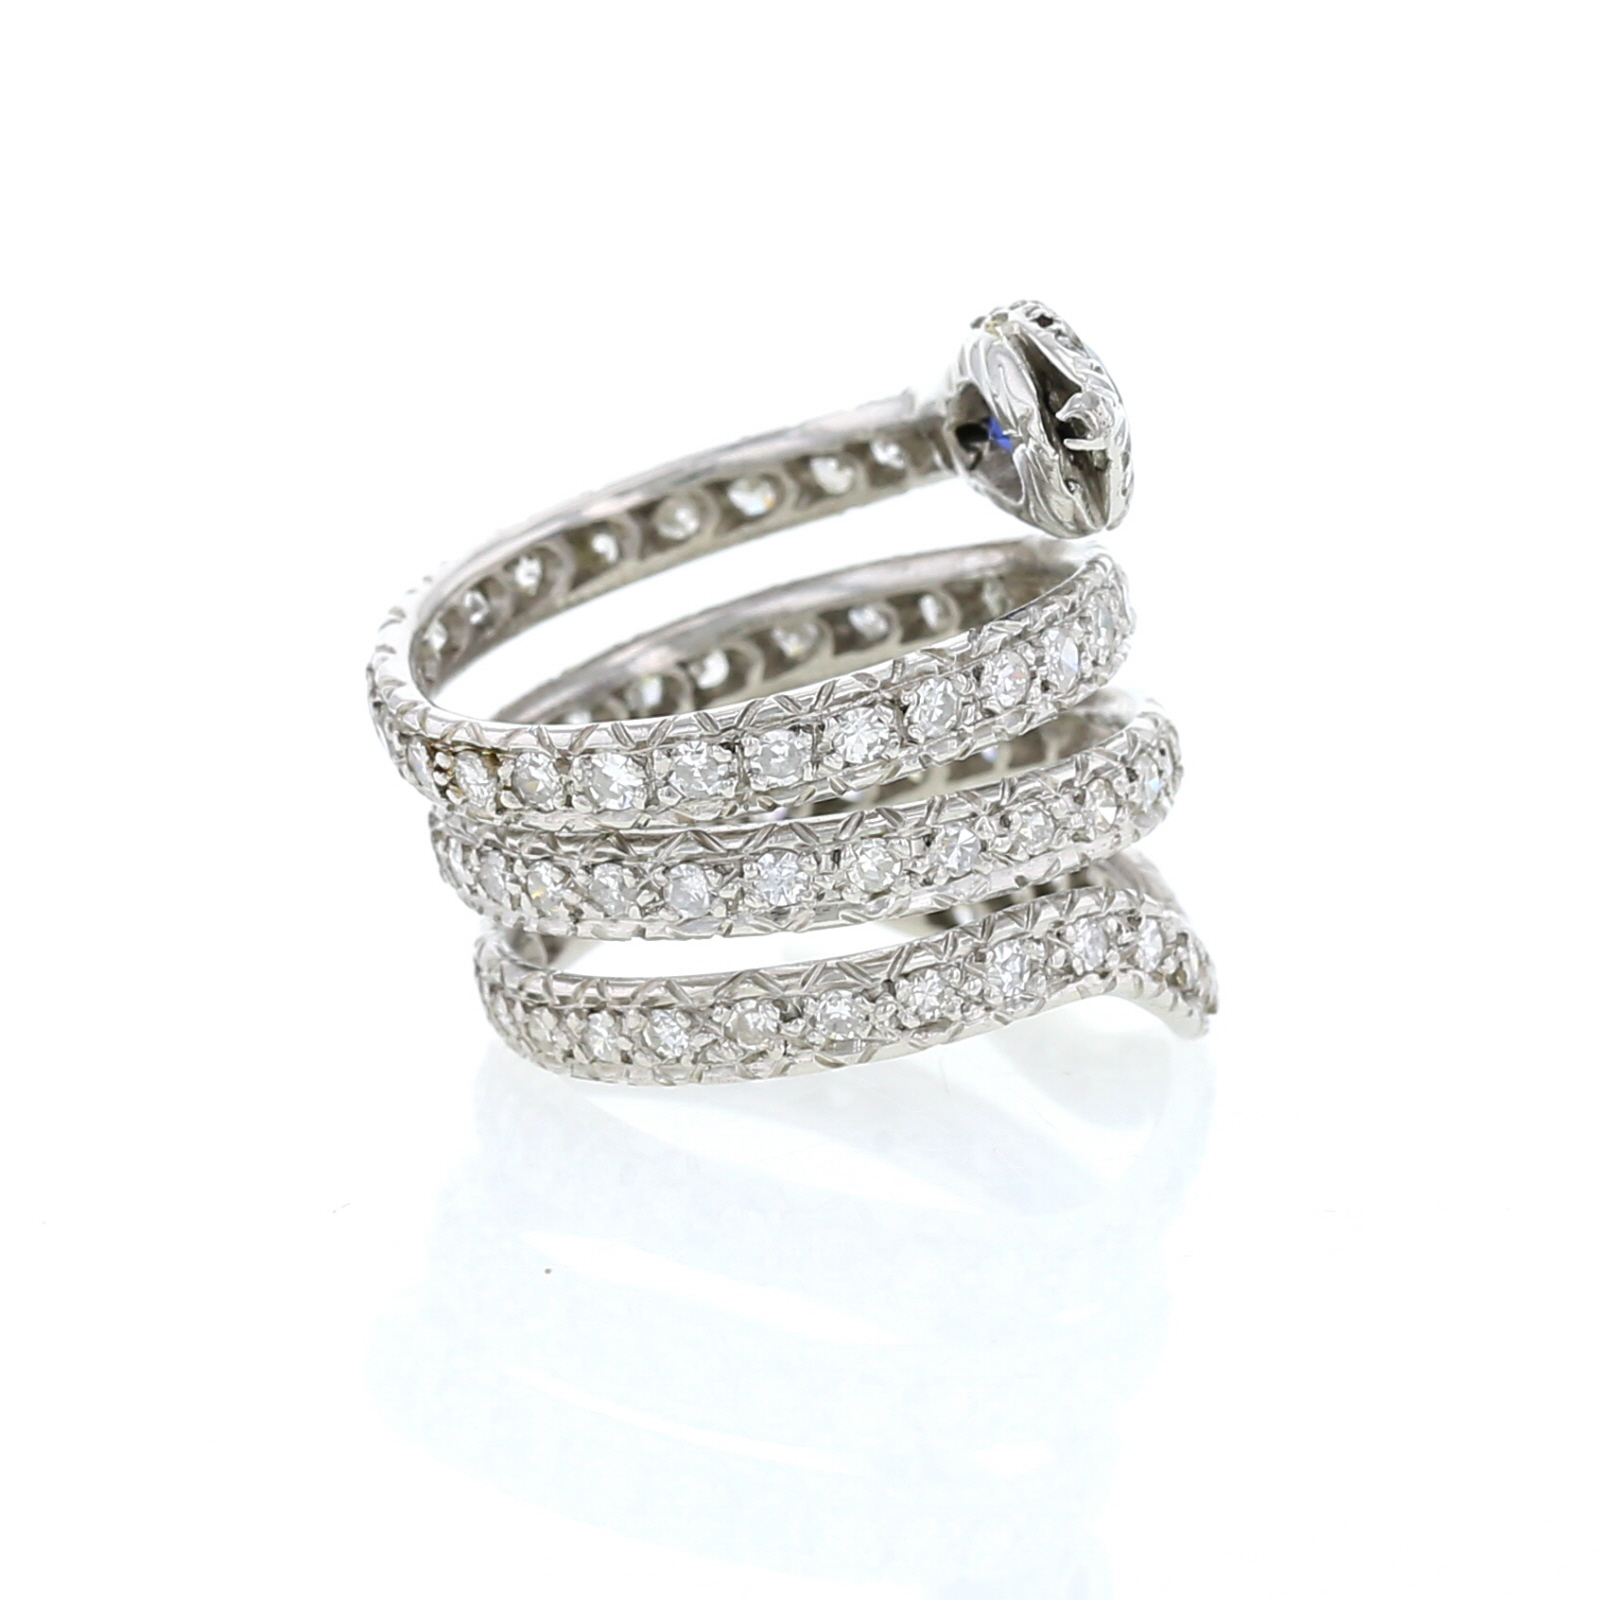 Ring In Platinium, Diamonds And Sapphire